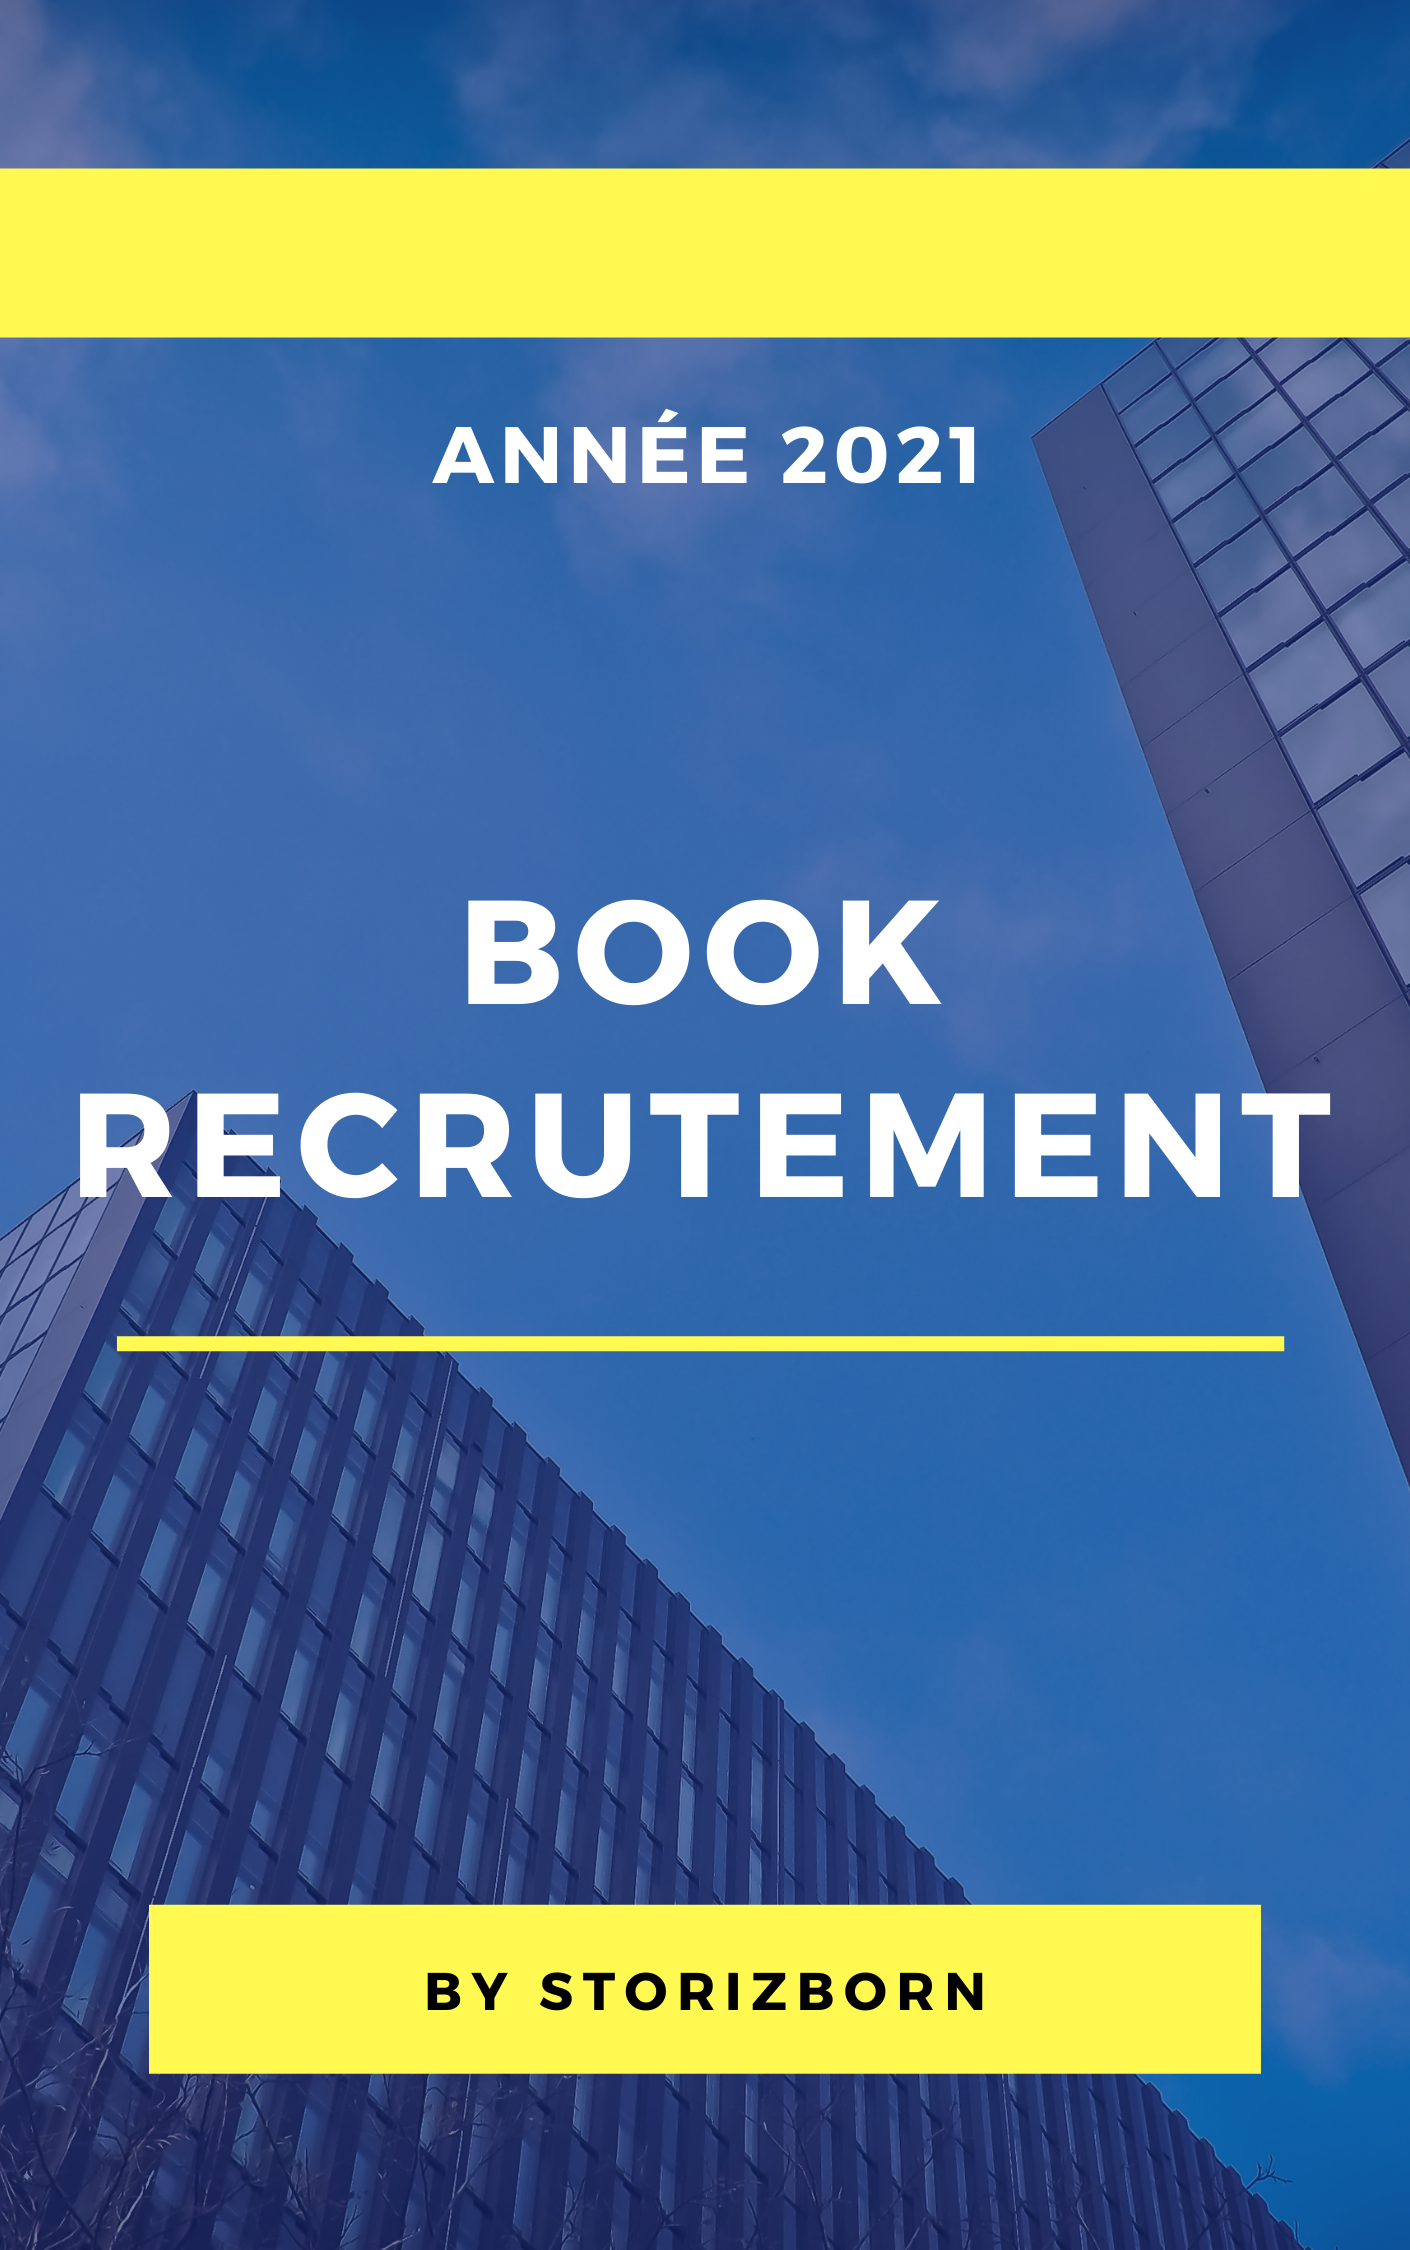  E-book recrutement 2021